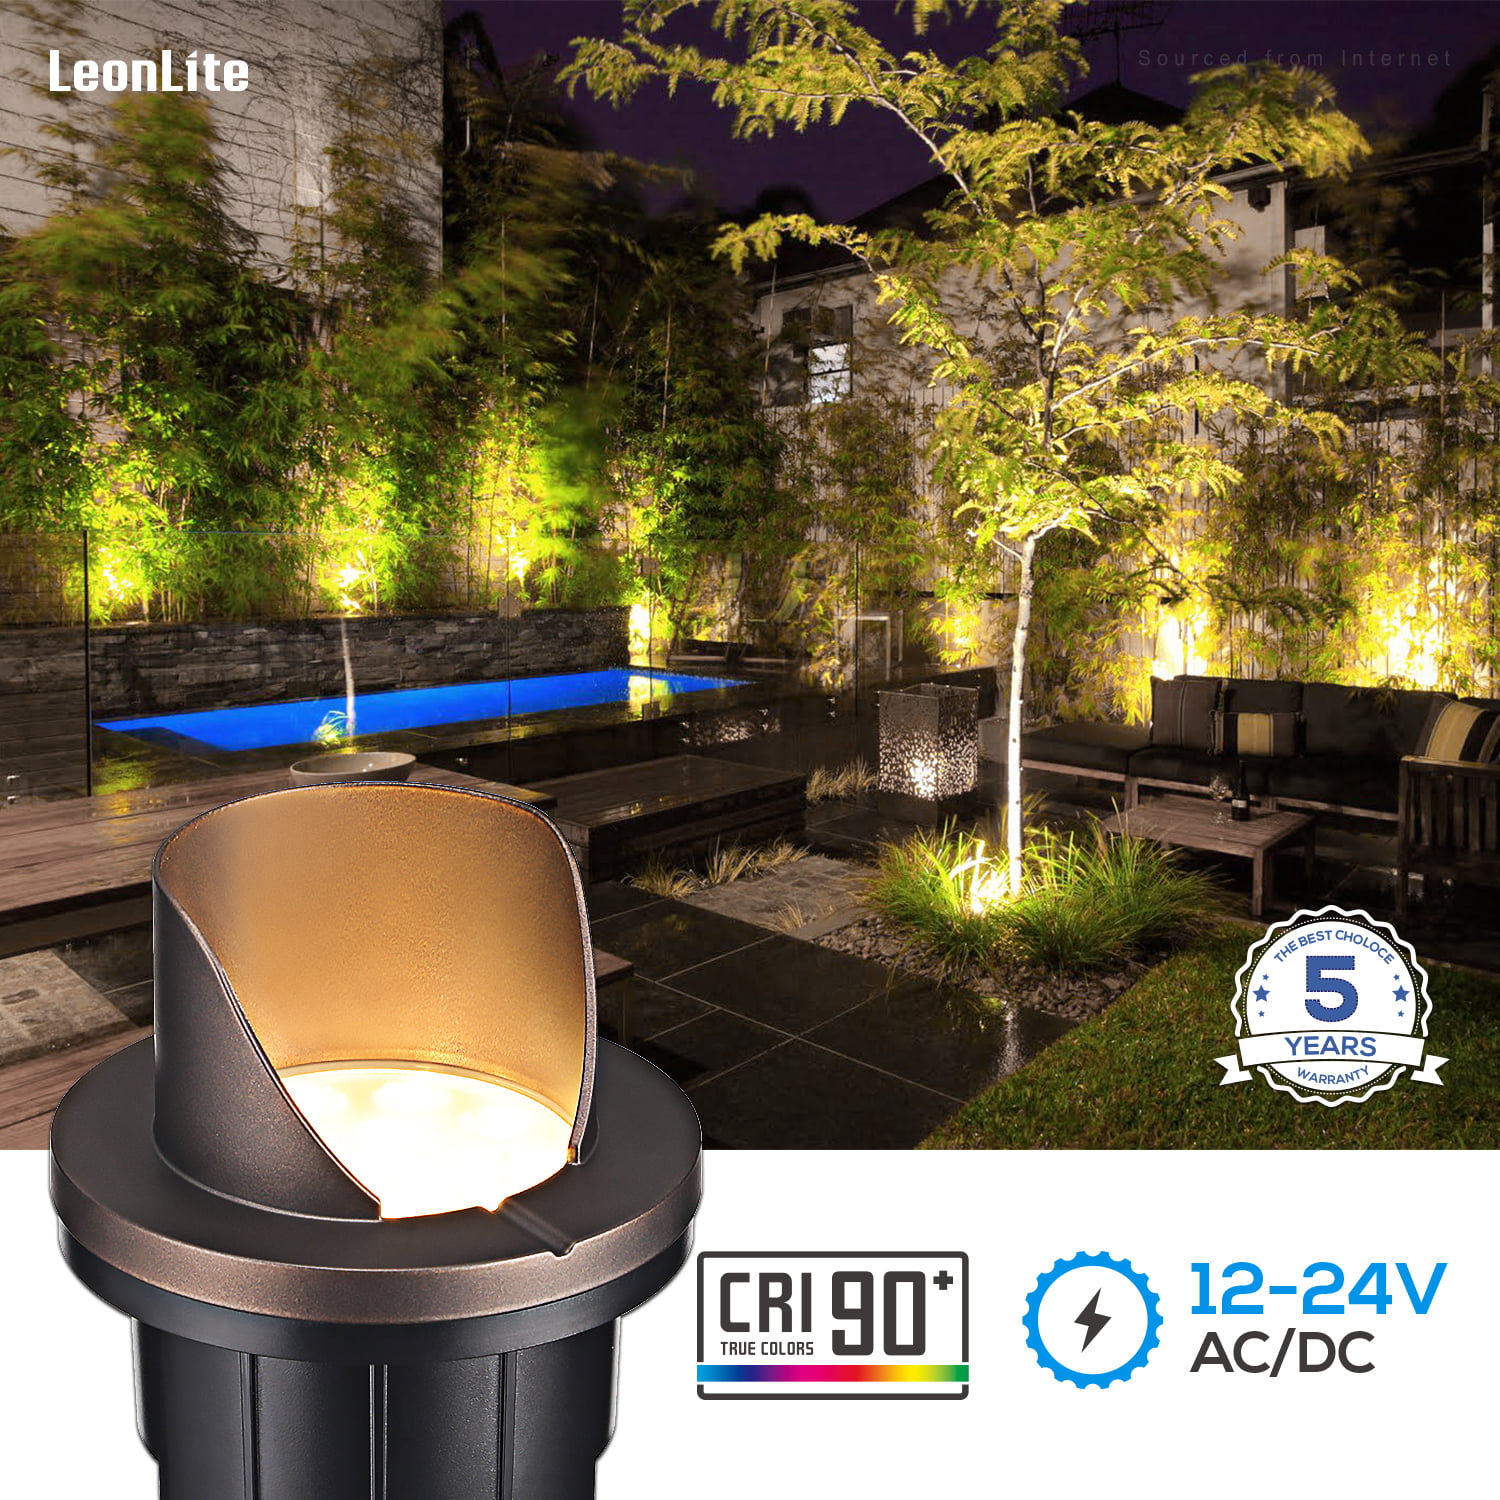 RSN 1W LED Buried Light IP67 Outdoor LED Garden Lighting 6000K Underground Security Lamp for Lanscape